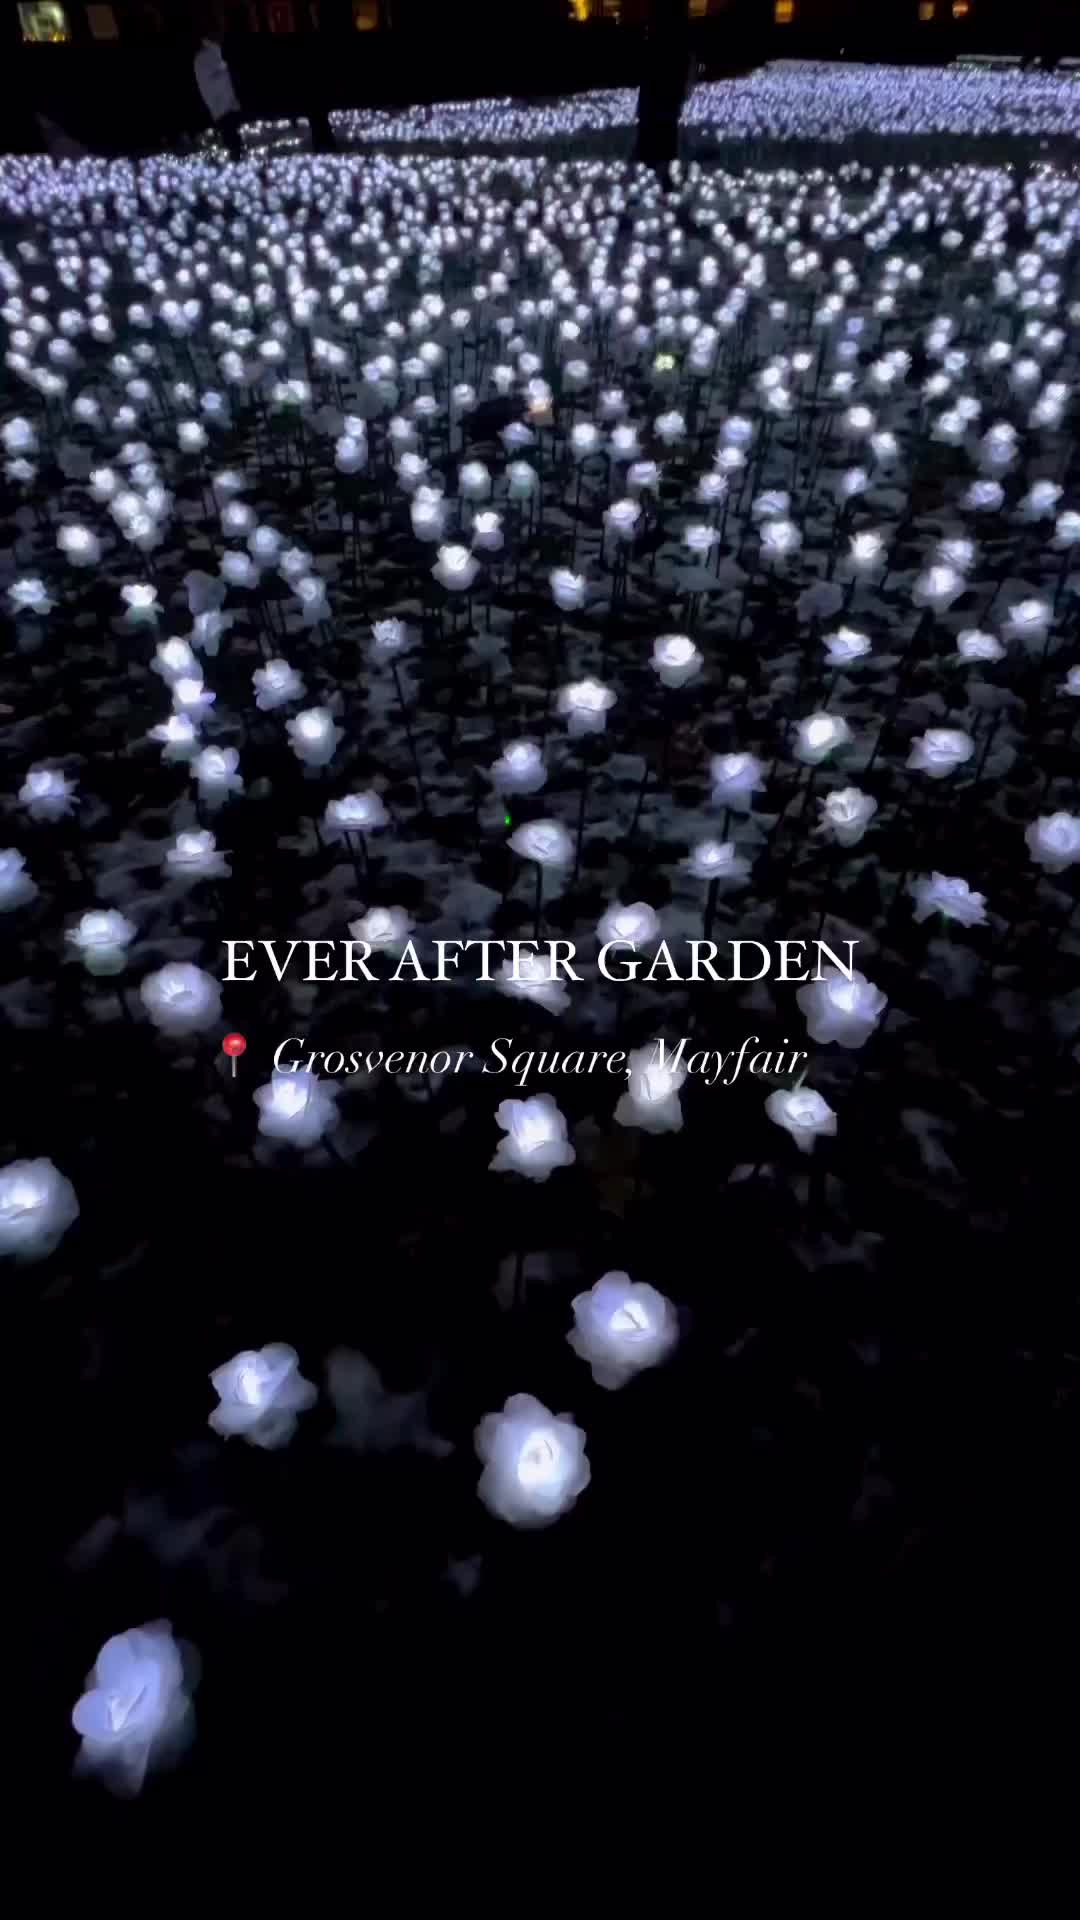 Ever After Garden in Mayfair Returns November 16th